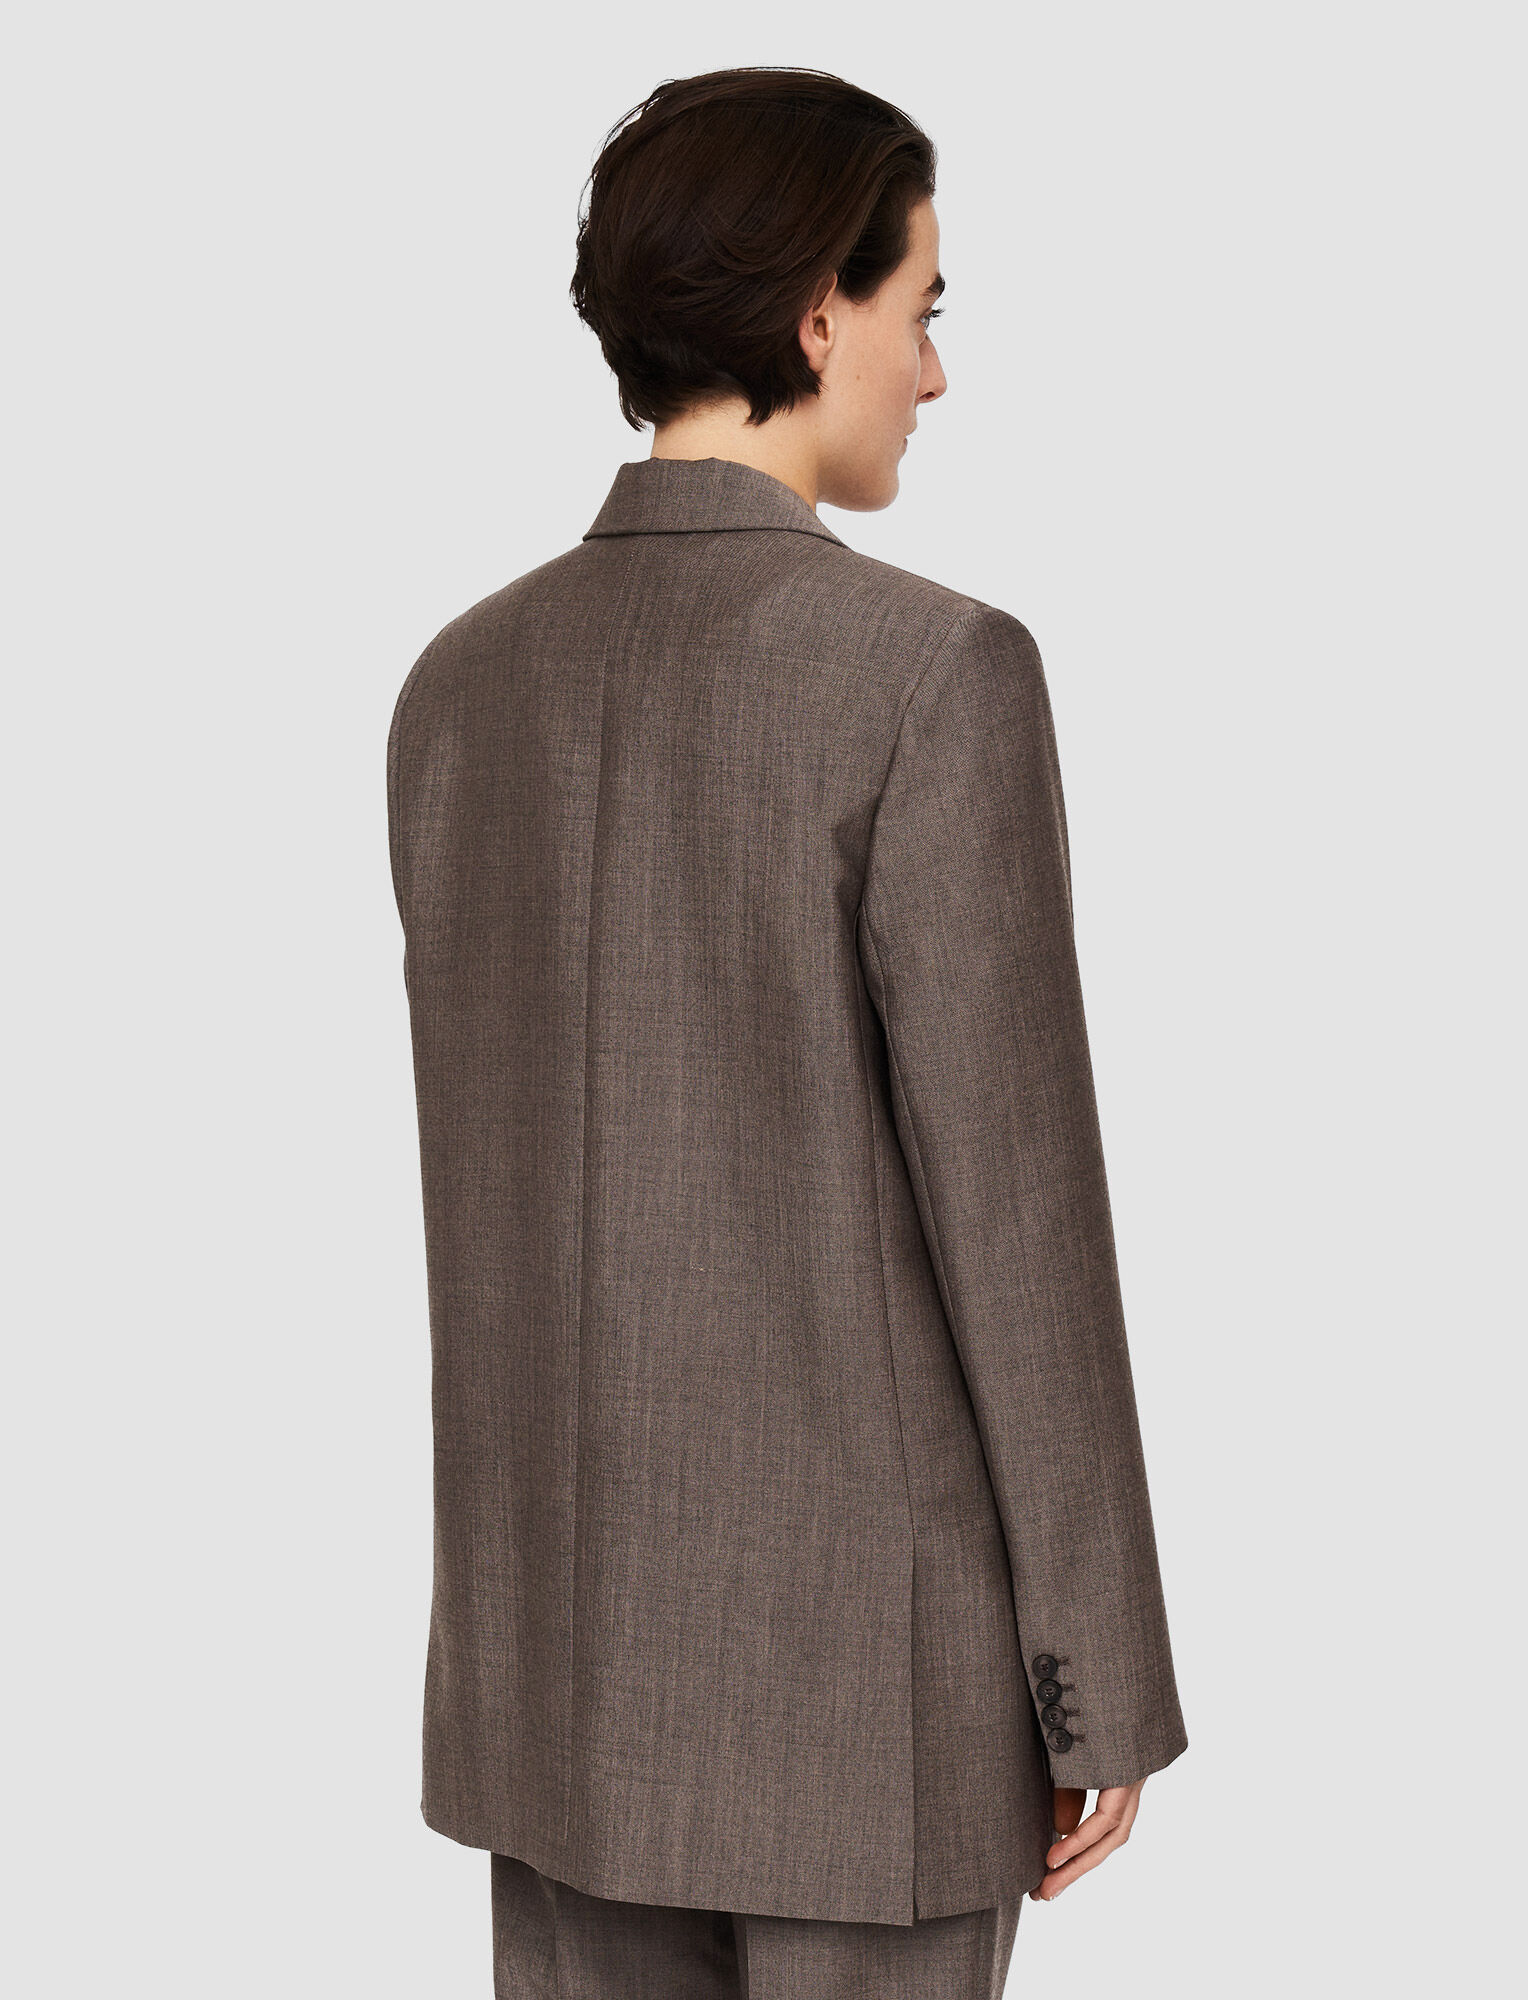 Joseph, Tailoring Wool Allcroft Jacket, in Warm Taupe Combo